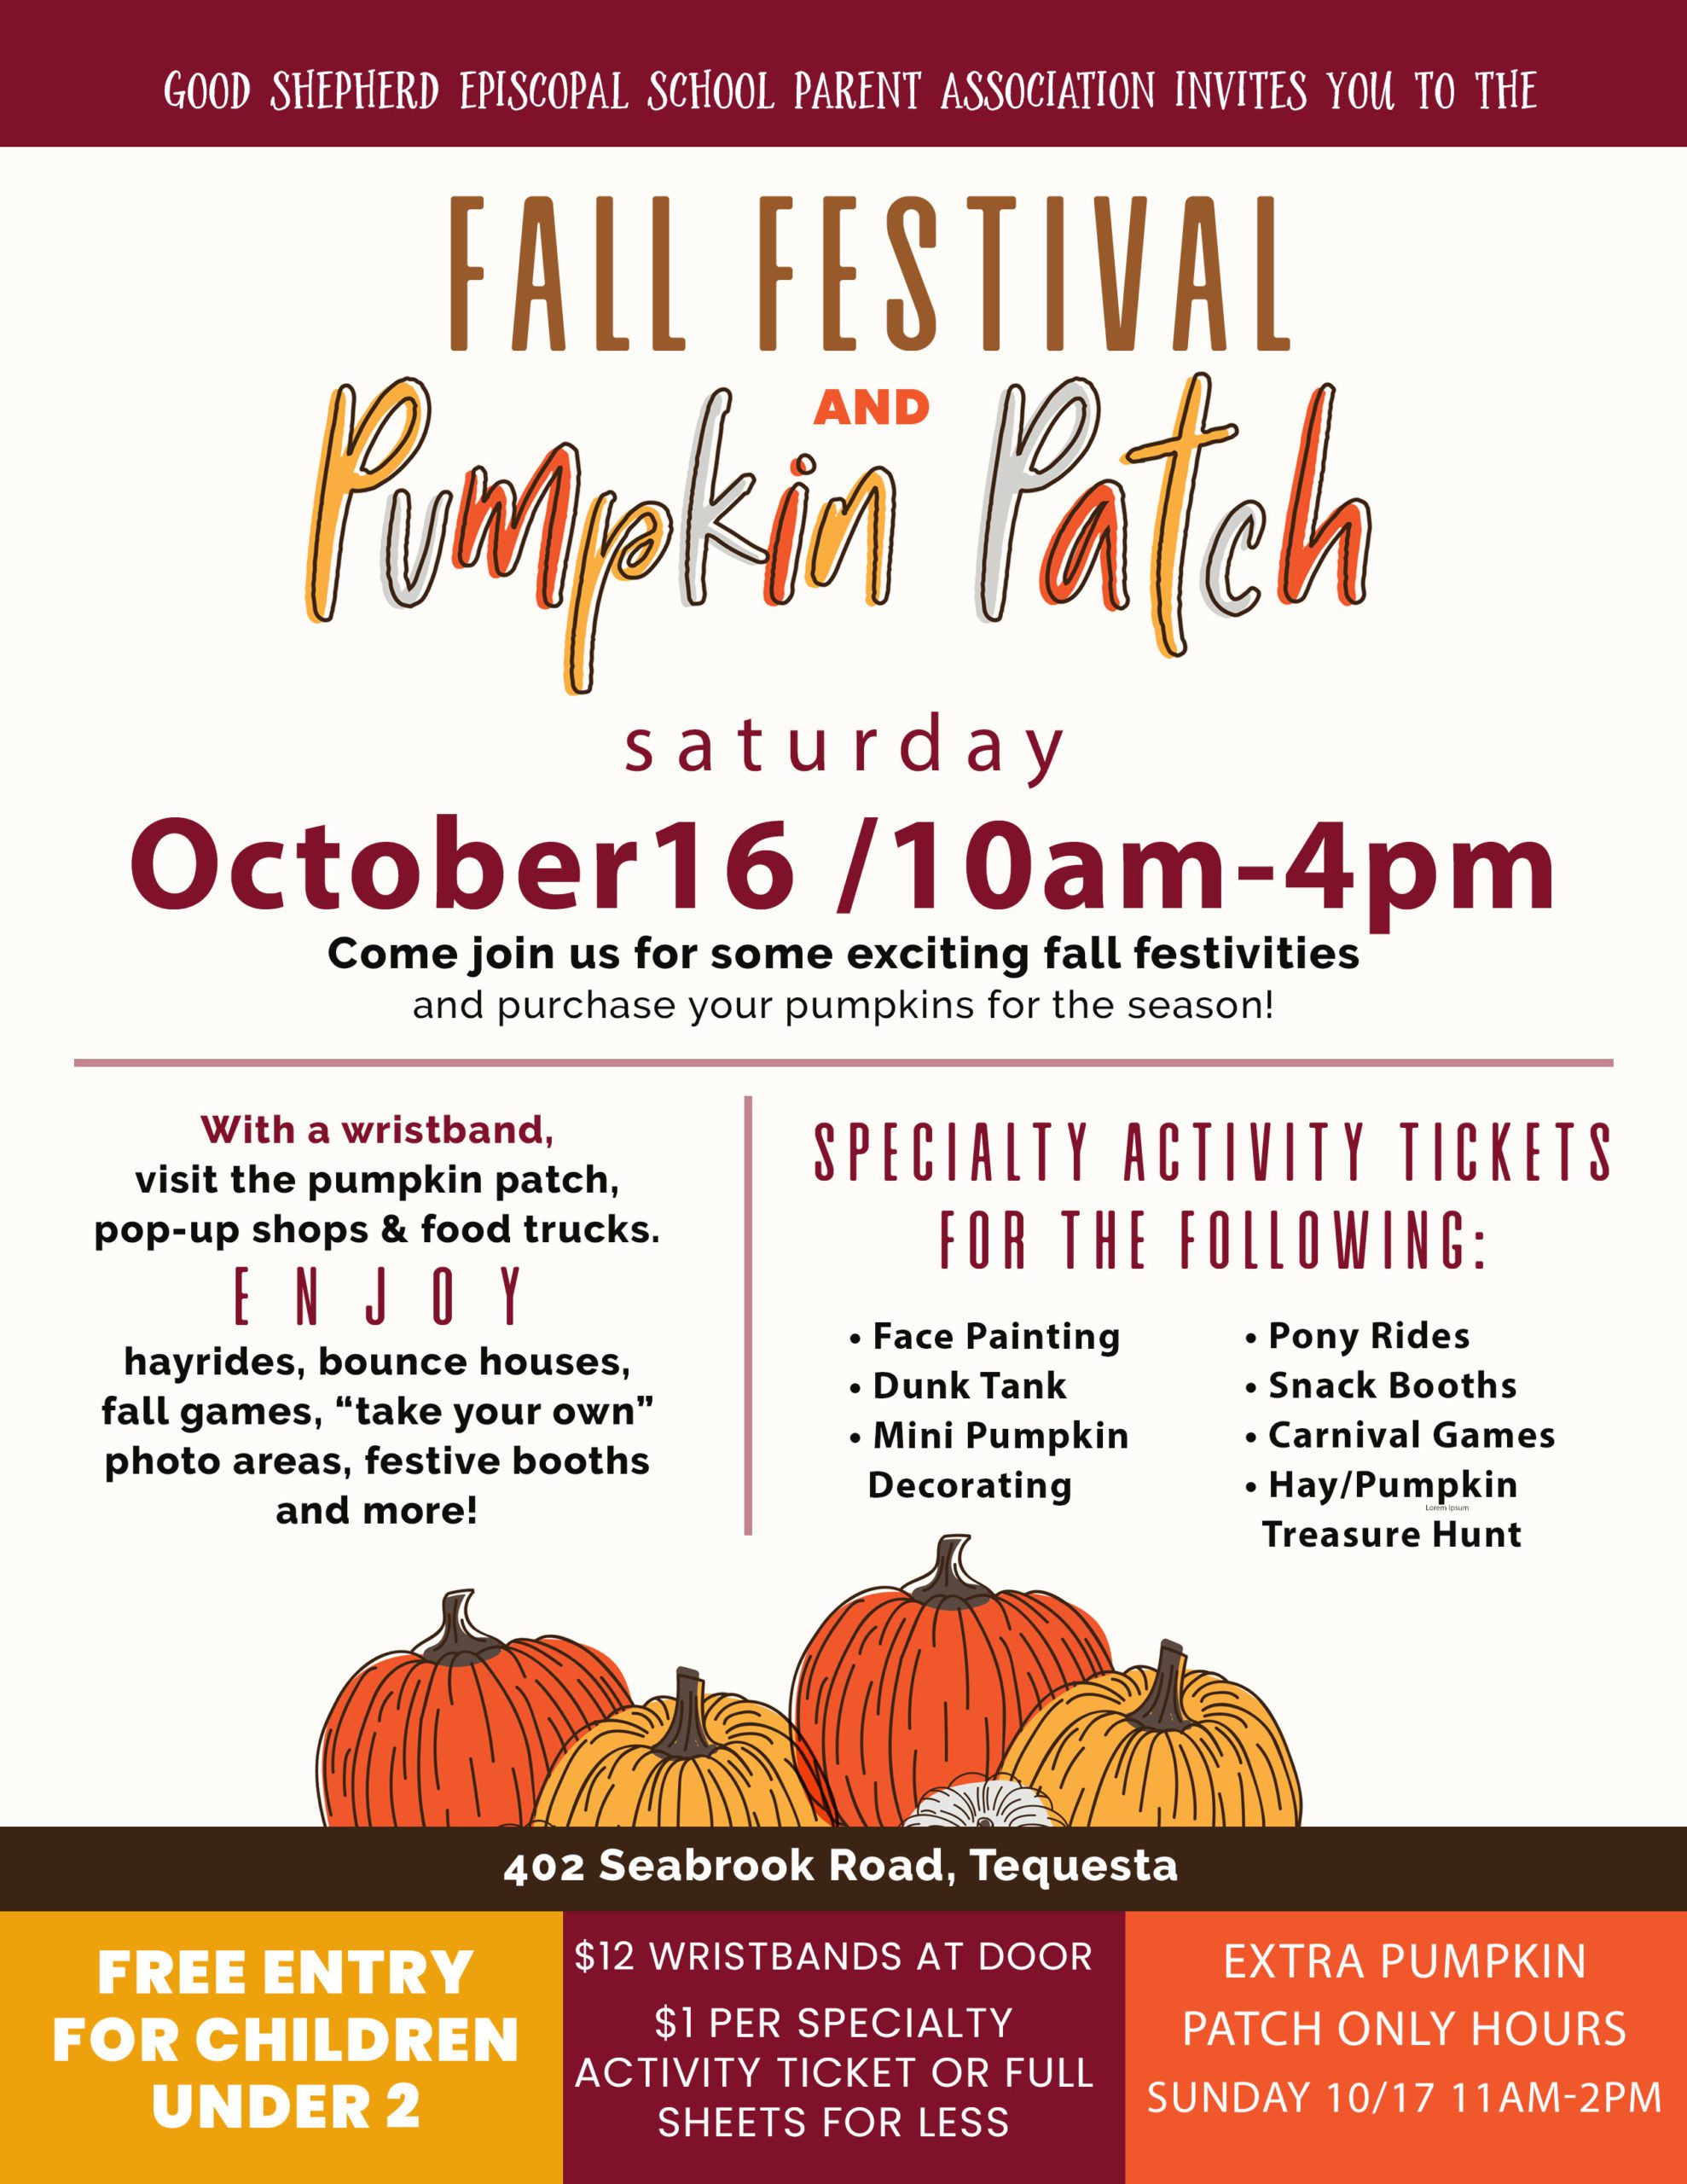 Fall Festival & Pumpkin Patch – Good Shepherd Episcopal School